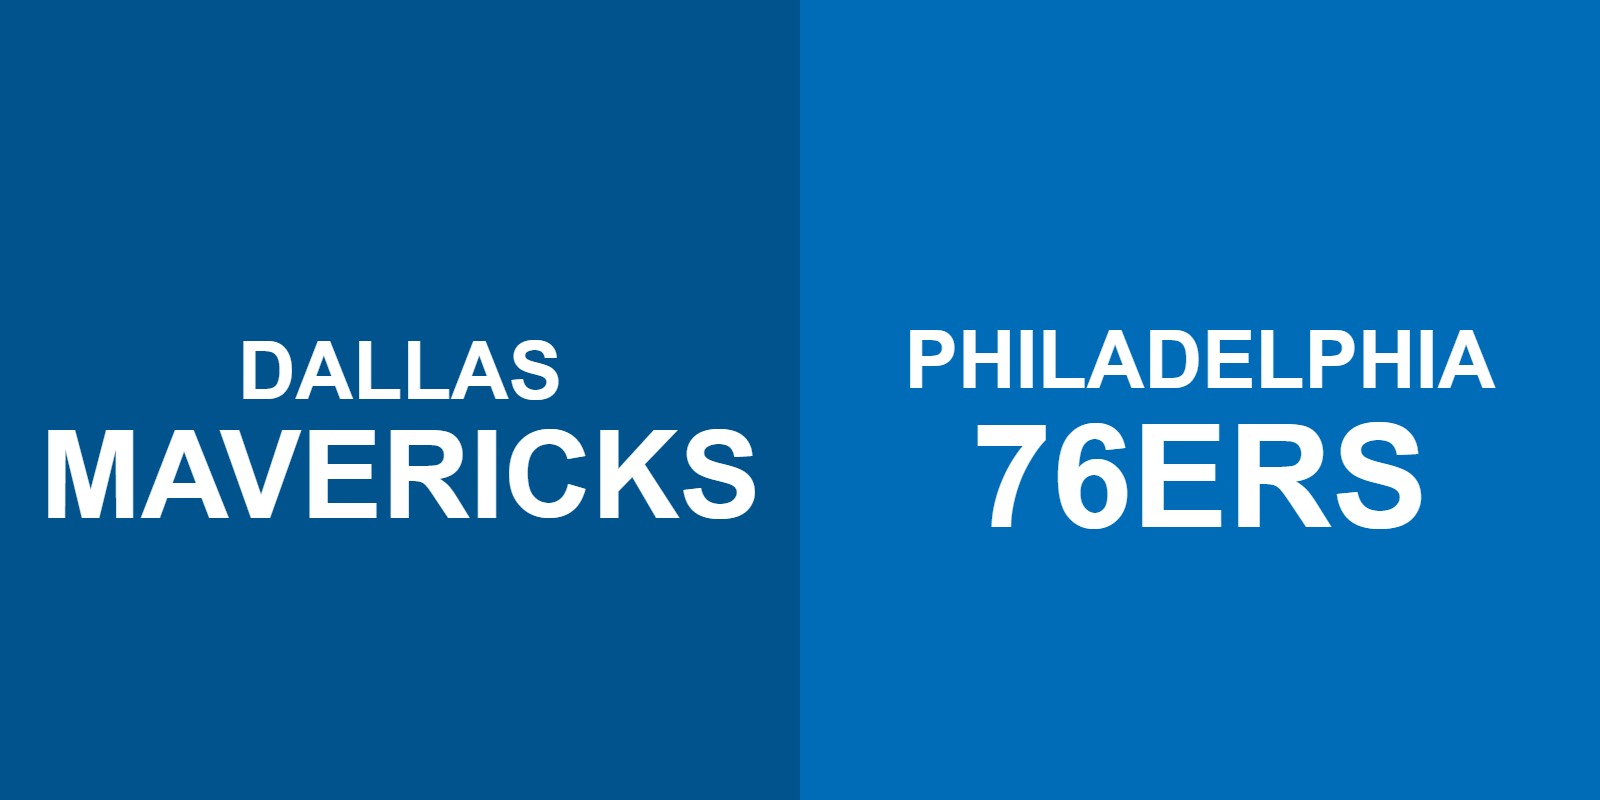 Mavericks vs 76ers